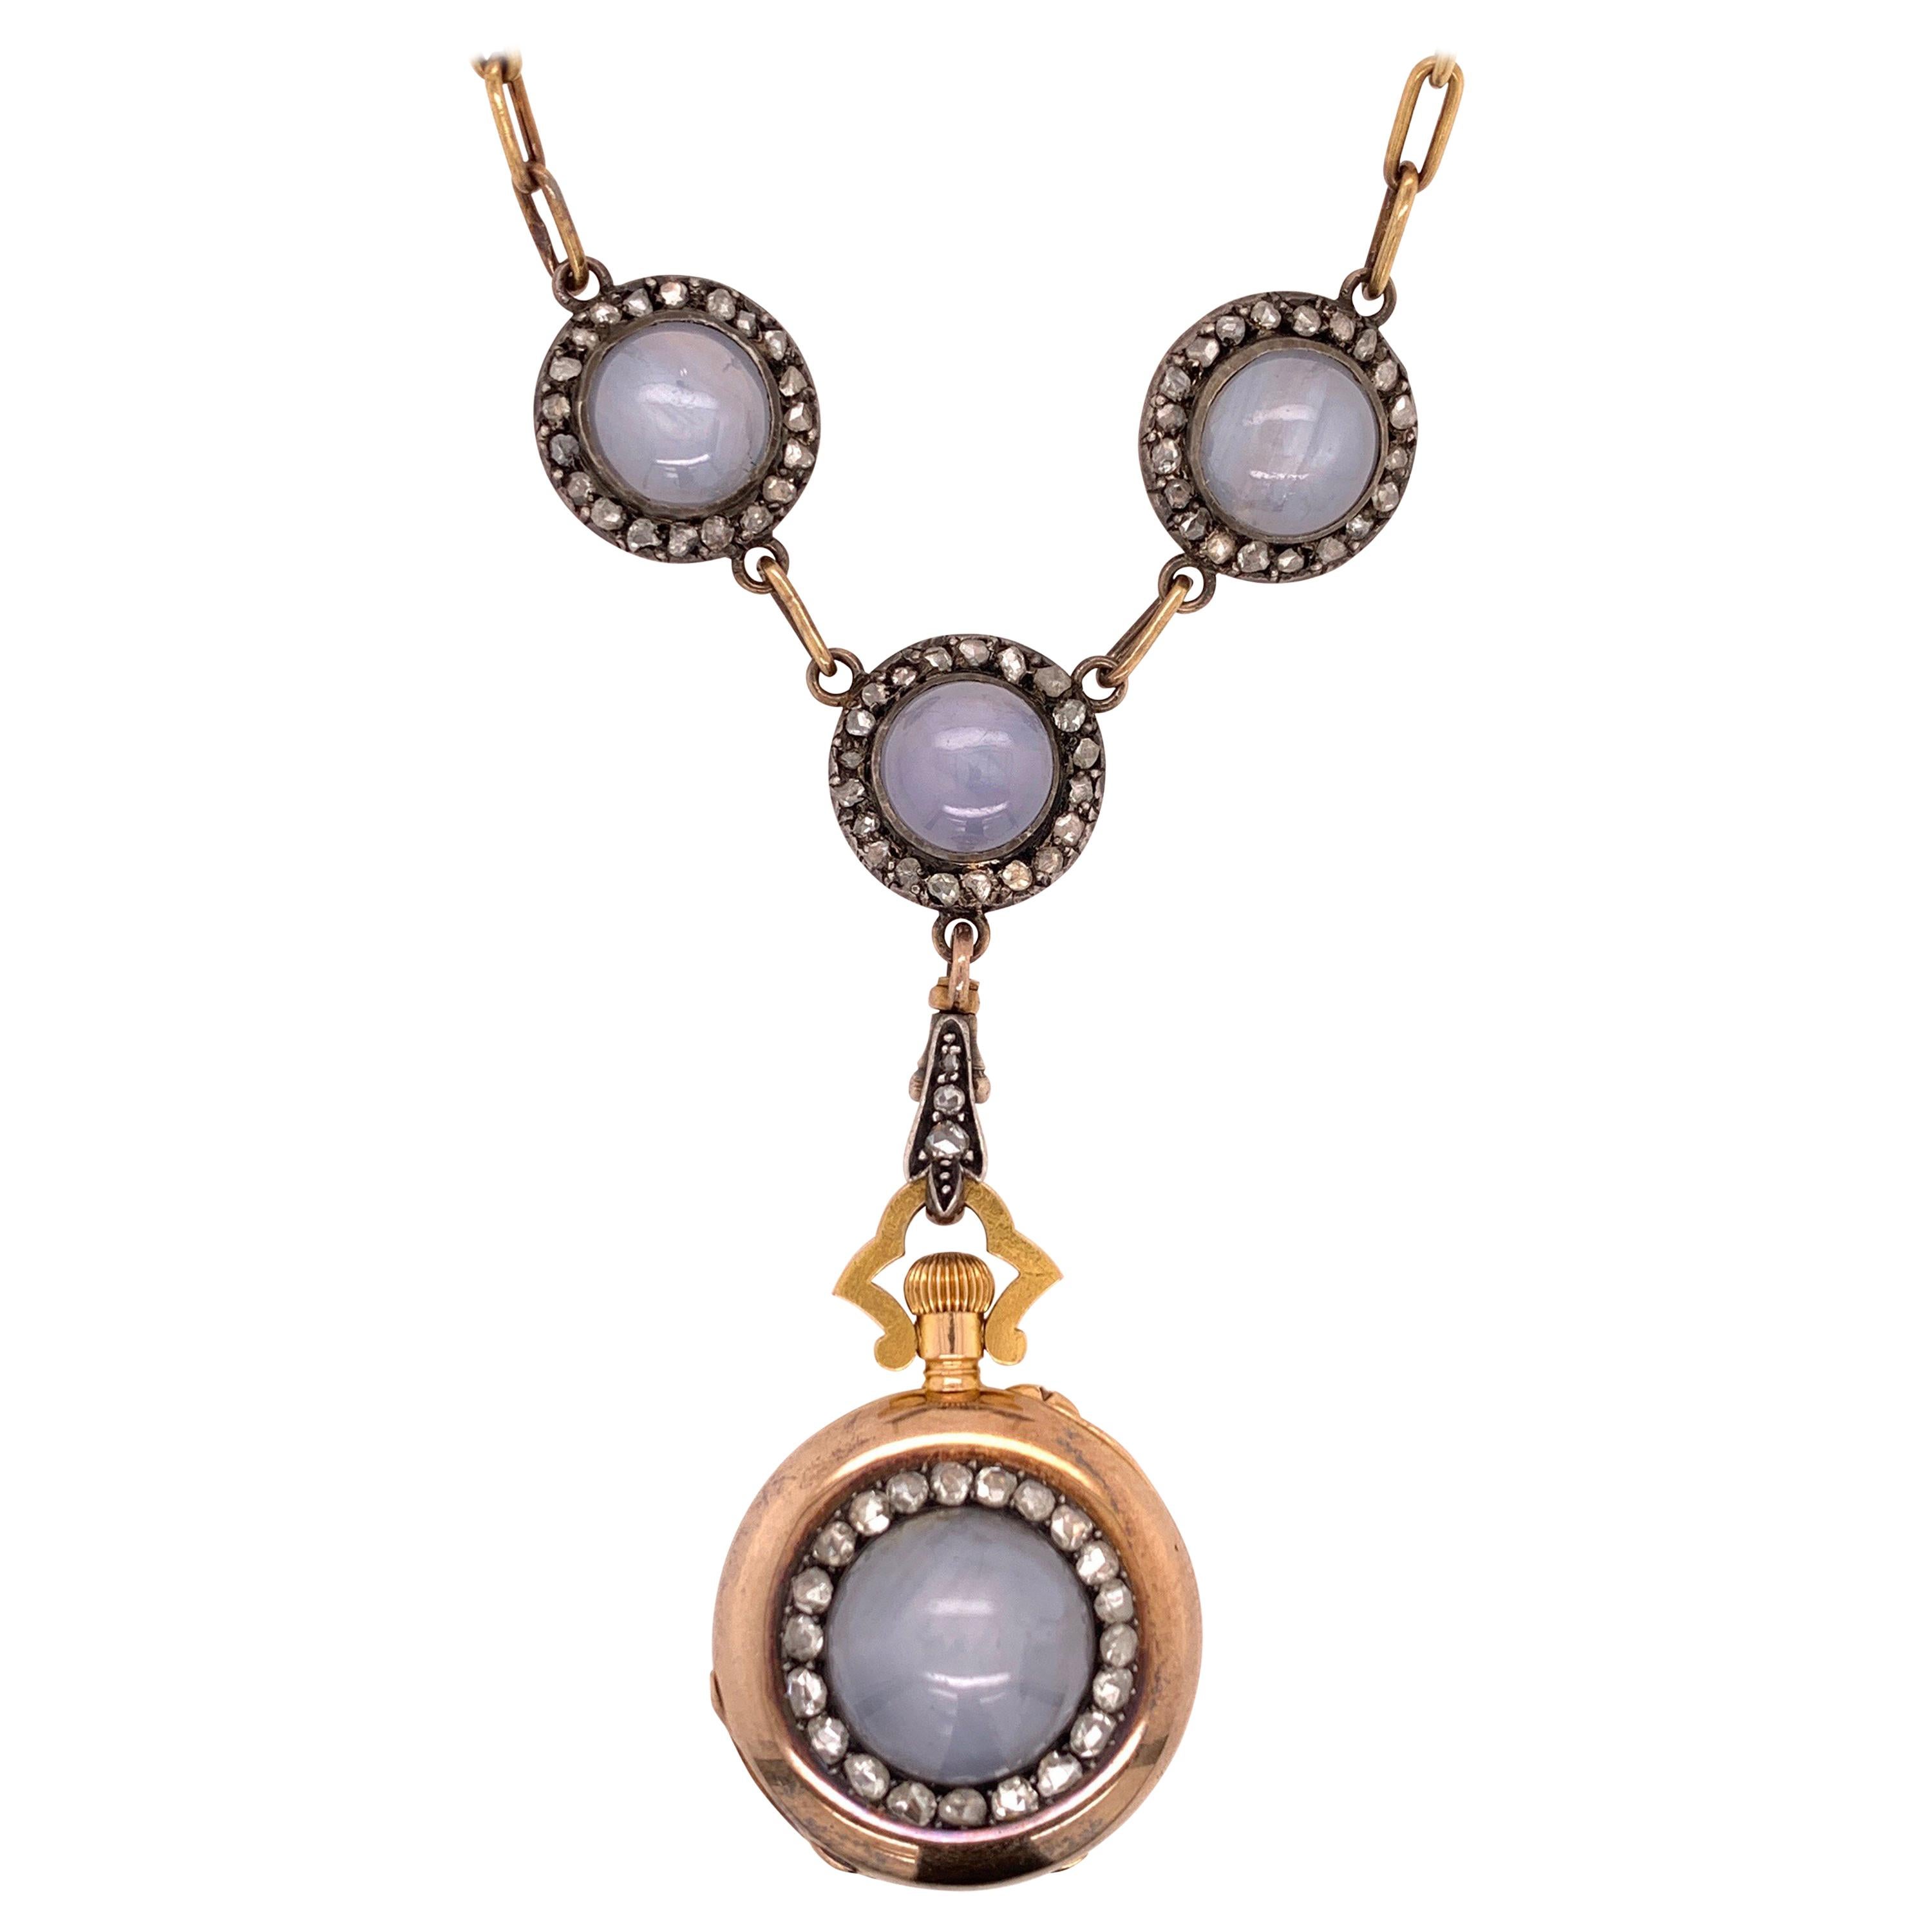 Original Boucheron Star Sapphire and Diamond Gold Necklace circa 1900 with Clock